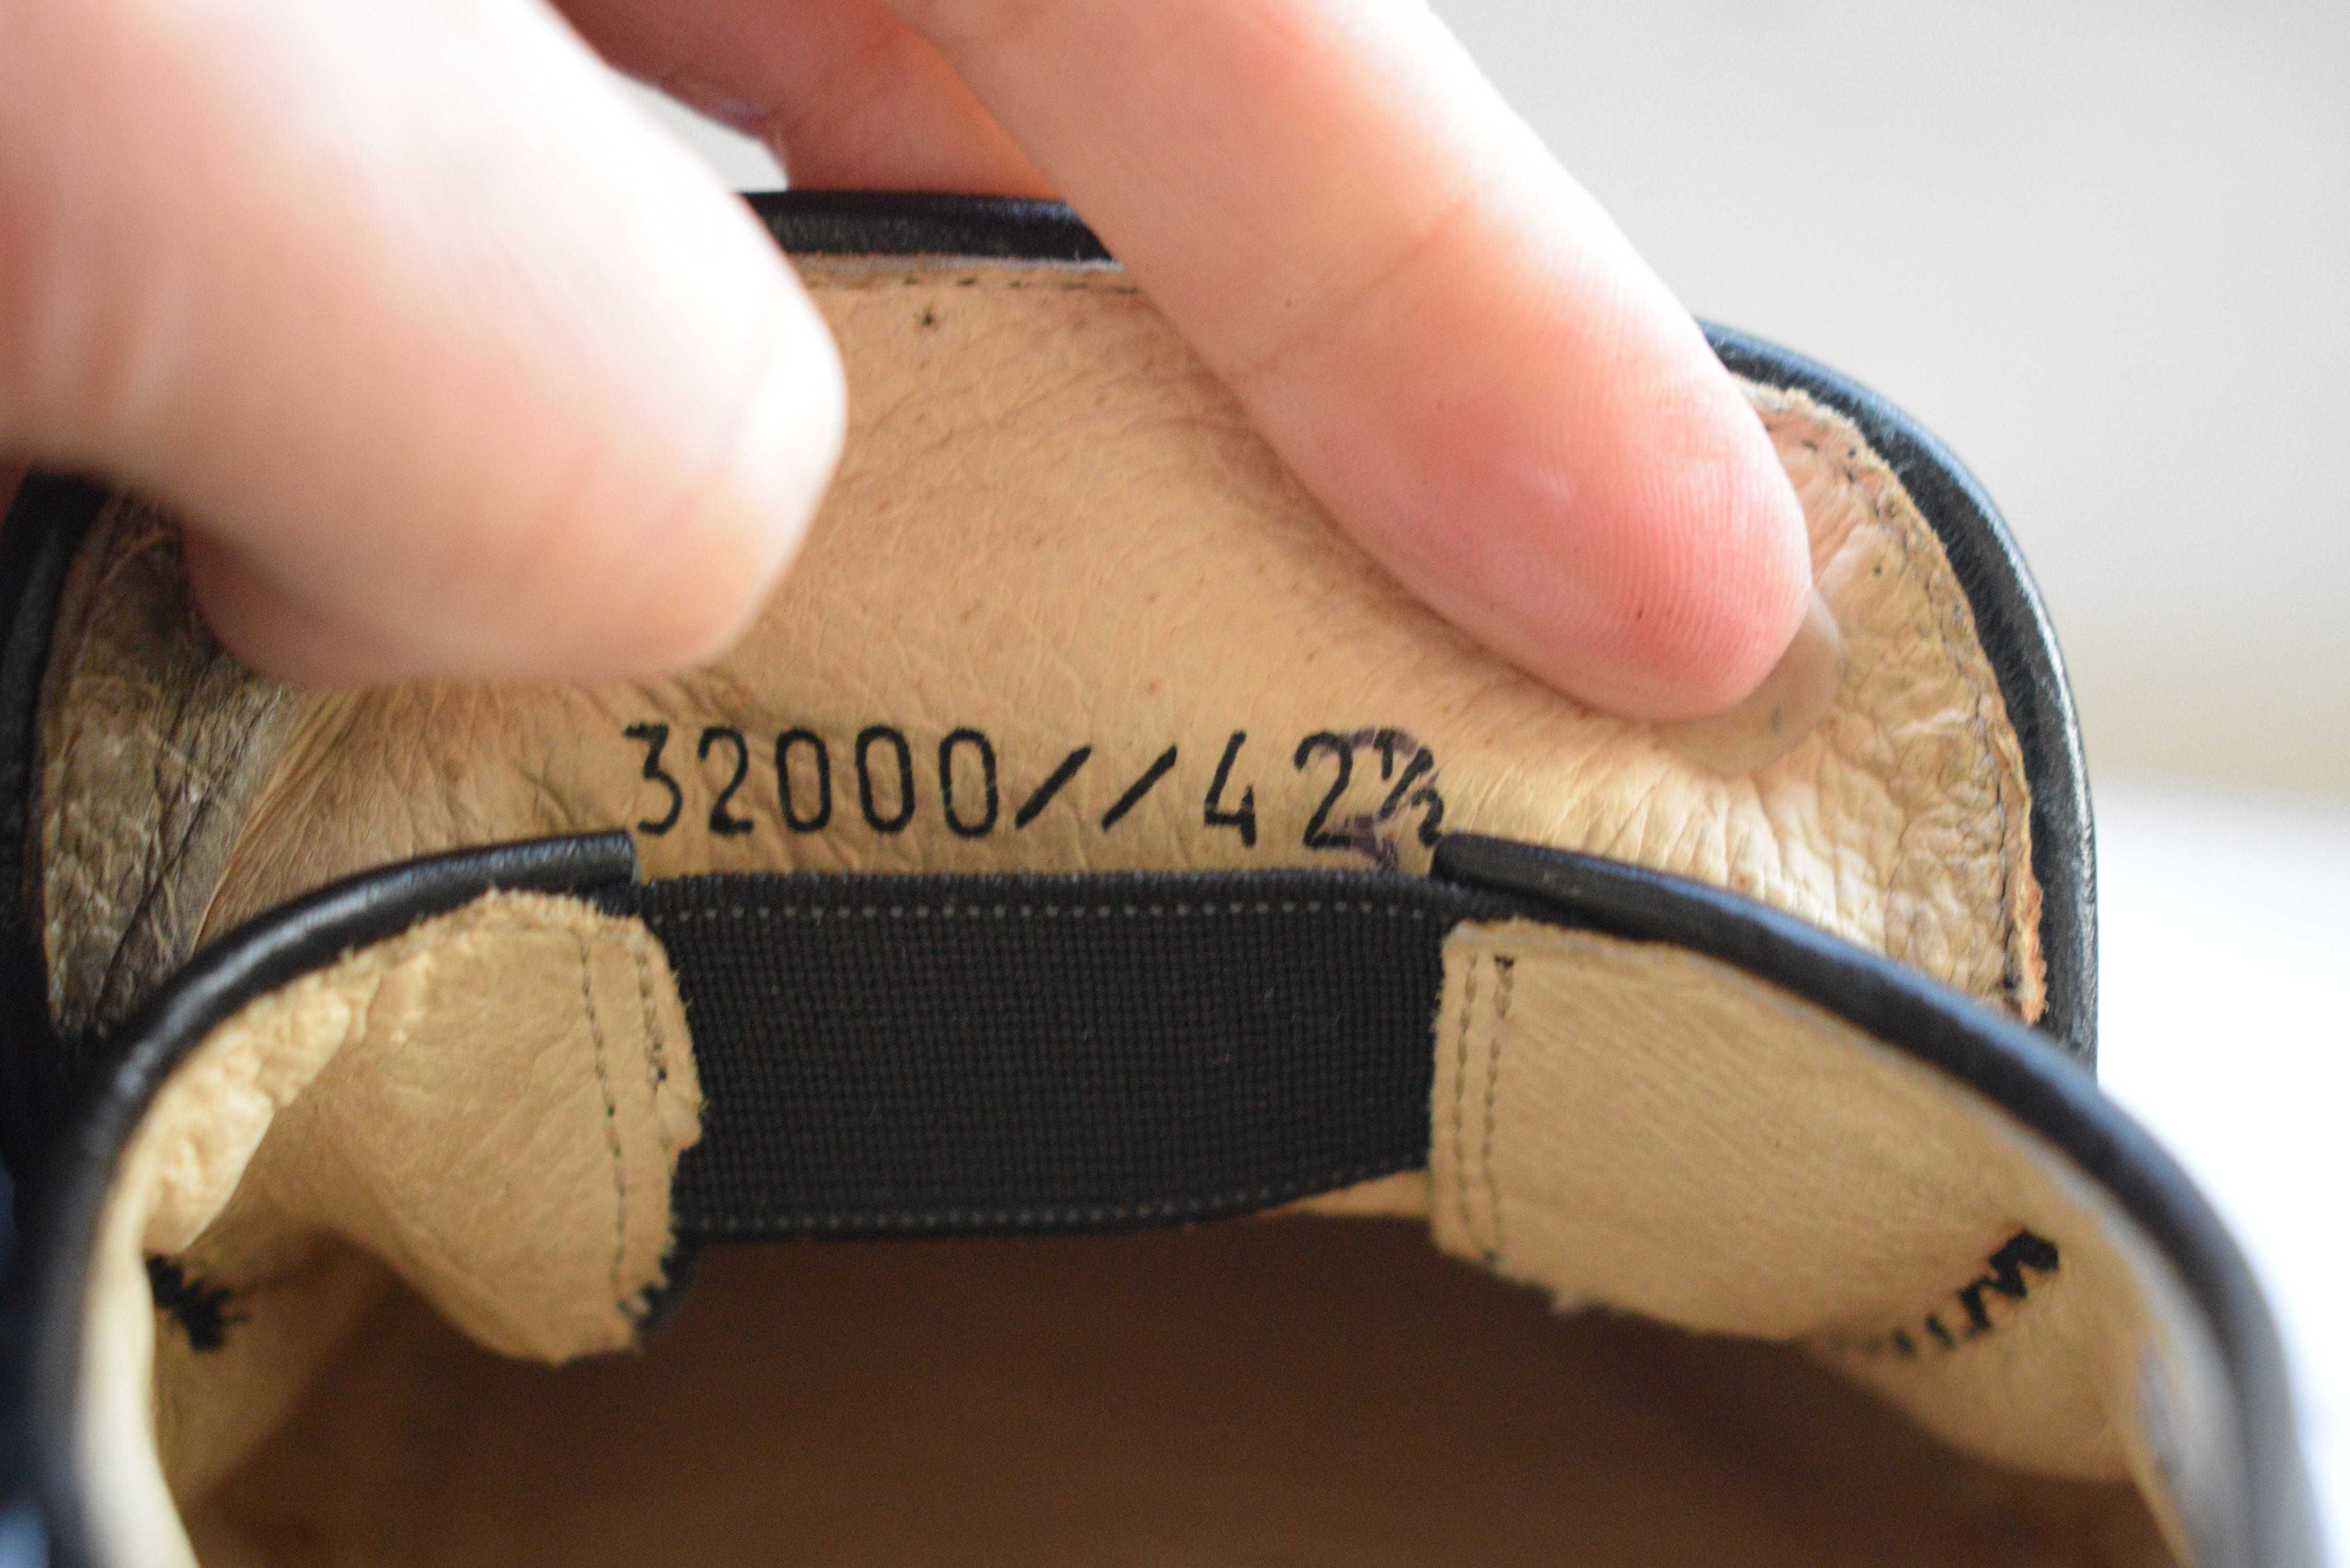 кожаные туфли мокасины лоферы Calzature Italy р. 43 28 см